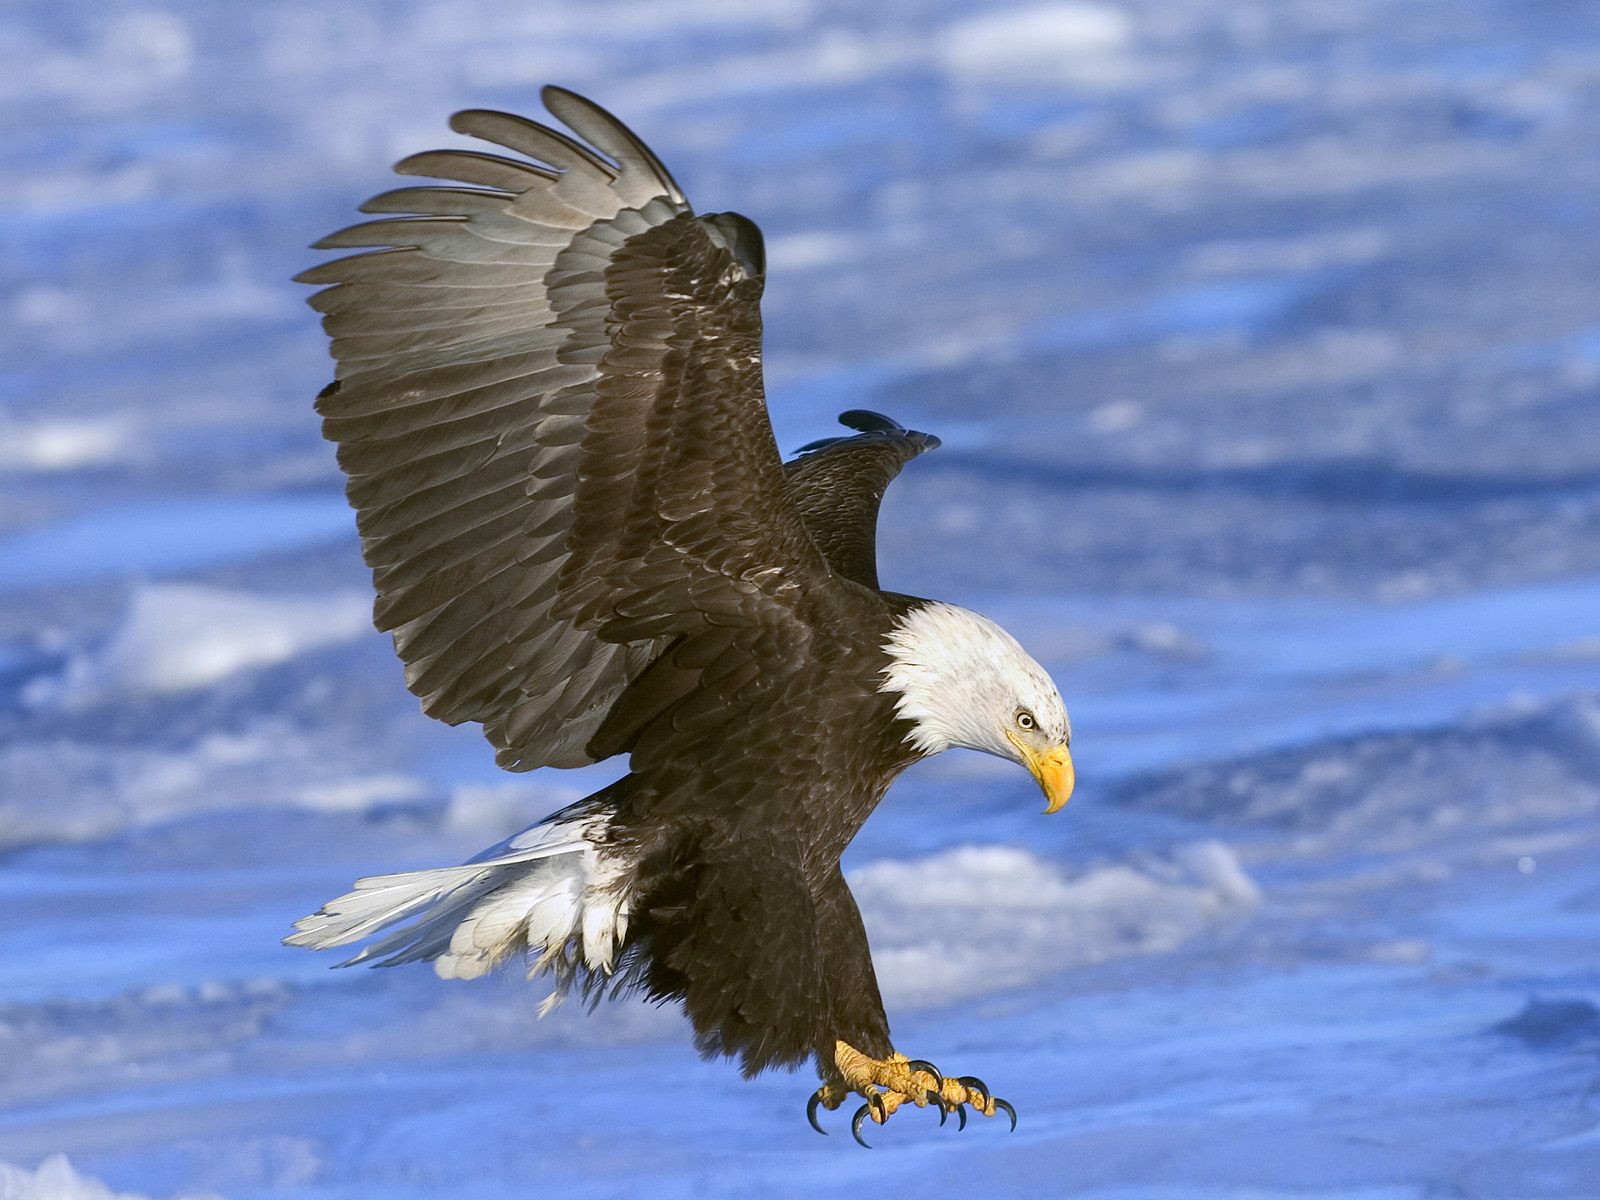 mobile desktop background hd golden eagle pictures photos